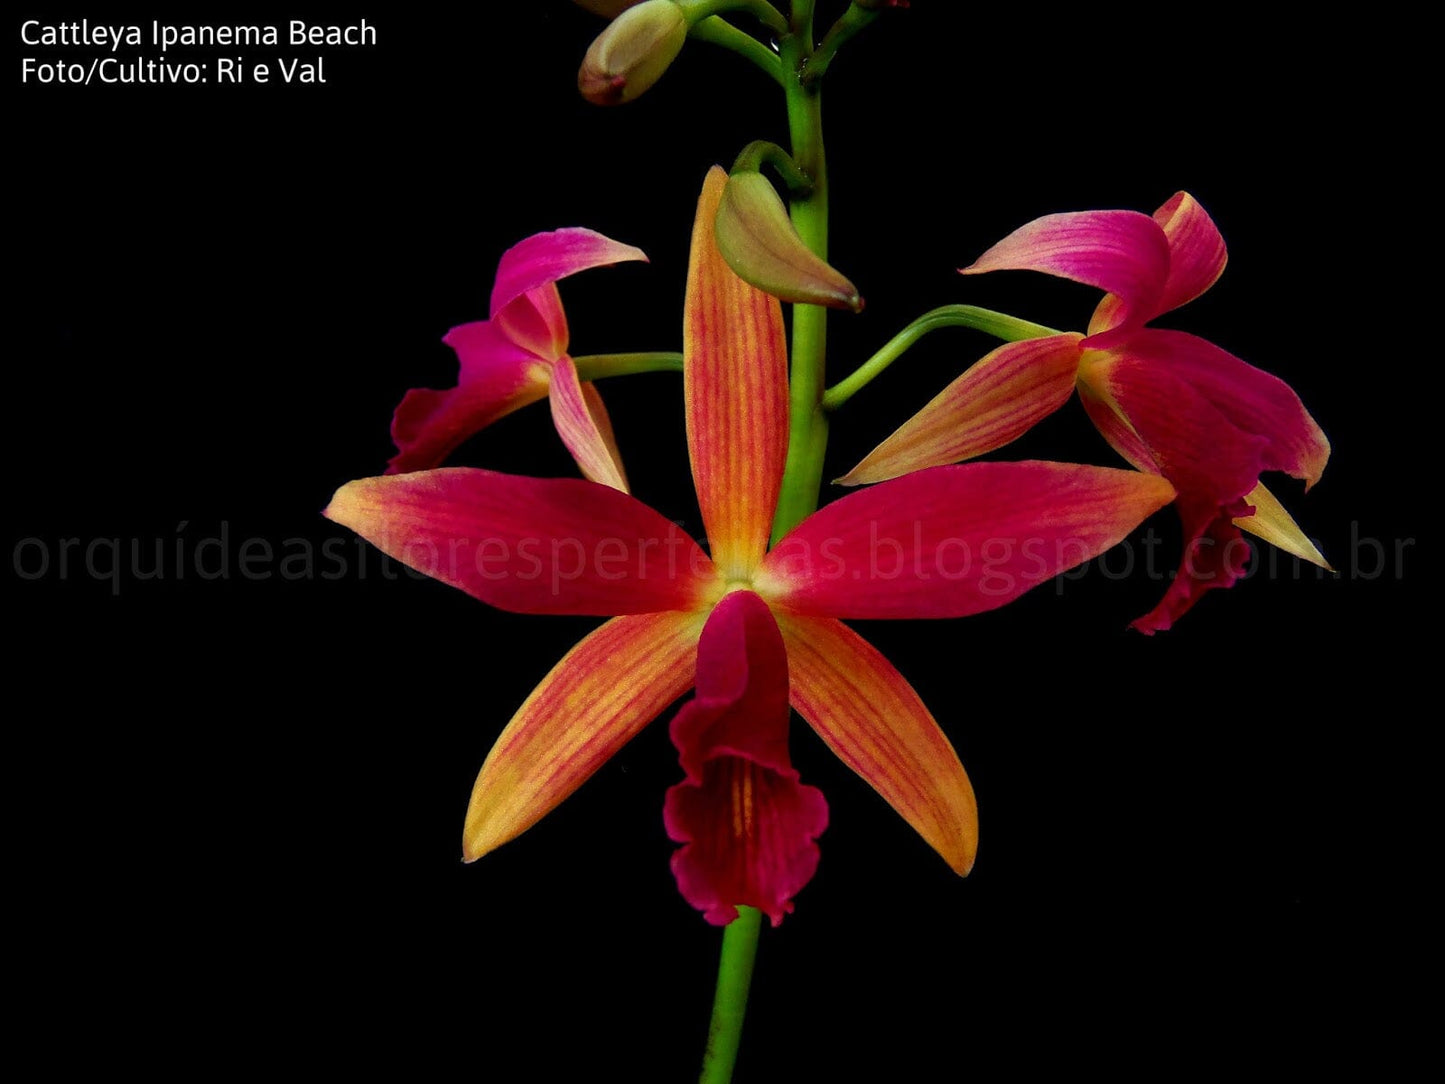 Cattleya tenebrosa var. alba x Cattleya briegeri Cattleya La Foresta Orchids 